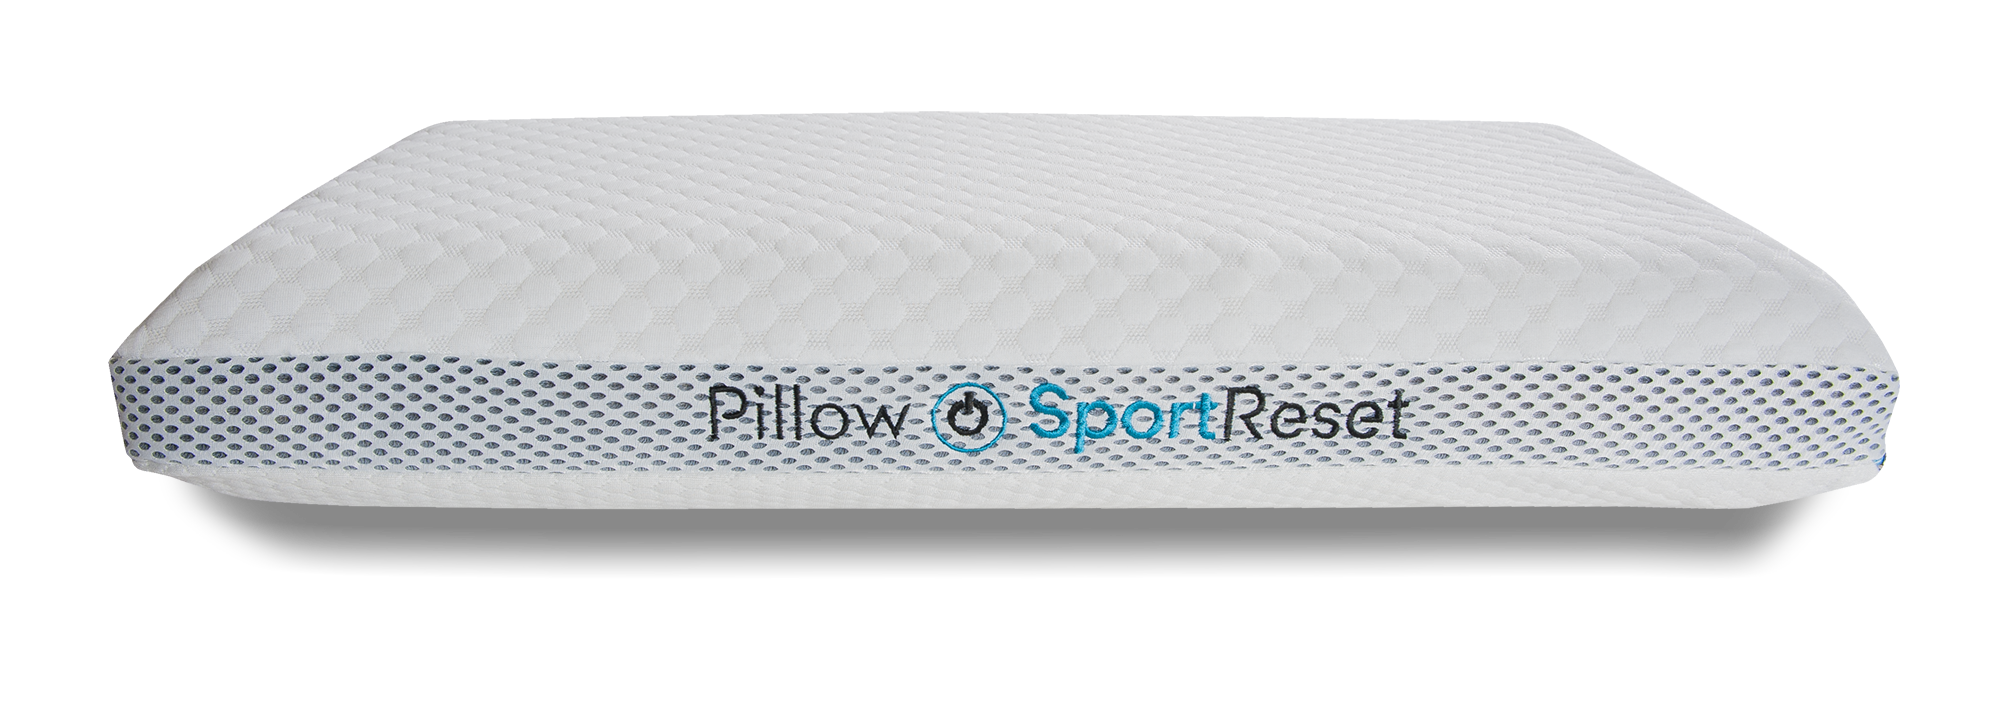 Pillow SportReset 71 web